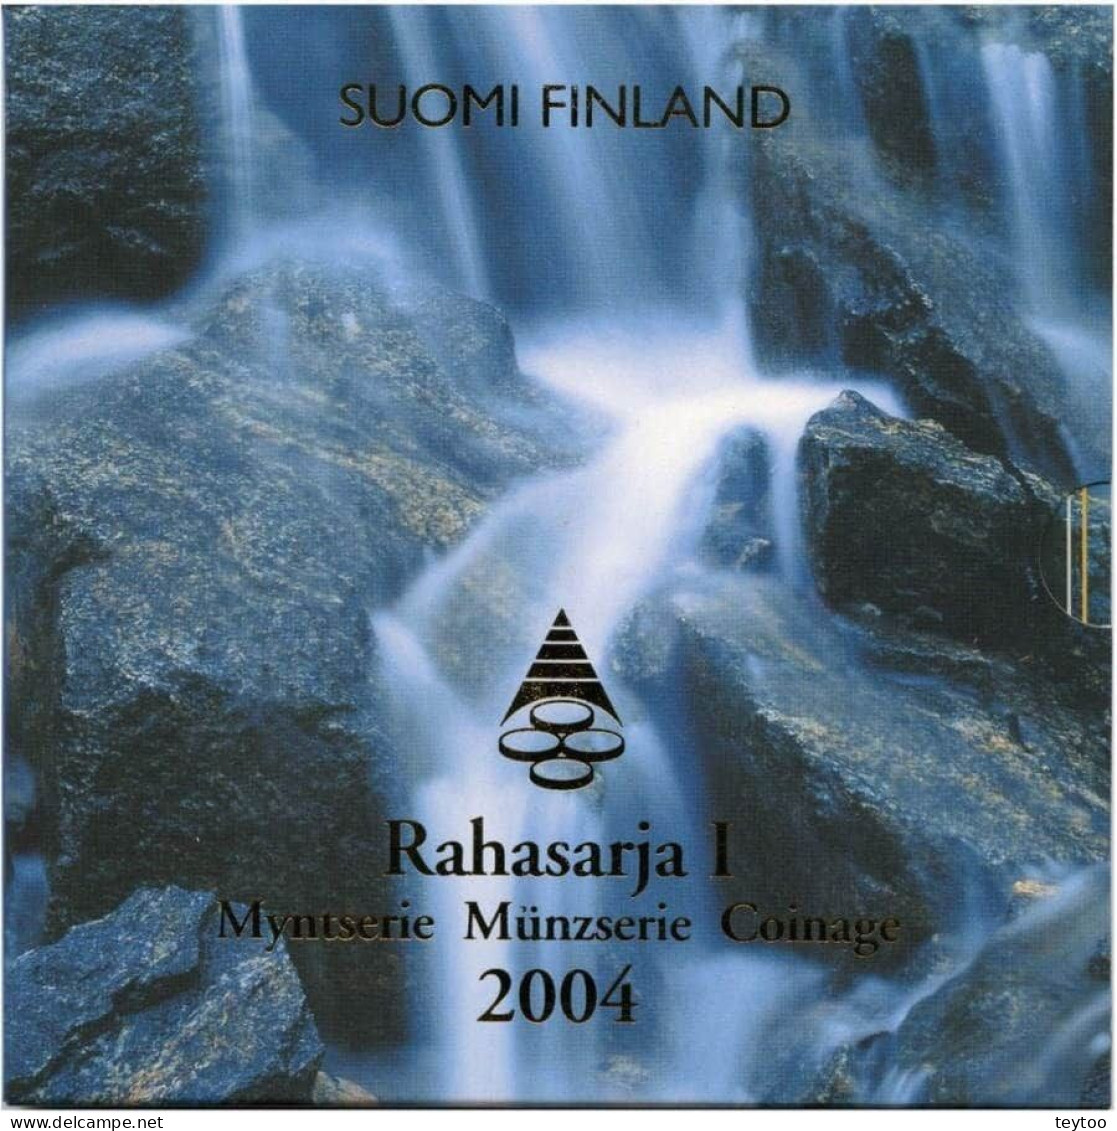 D0171# Finlandia 2004. Euroset. Con Medalla De 'Ampliación De La Eurozona' (BU) - Finland